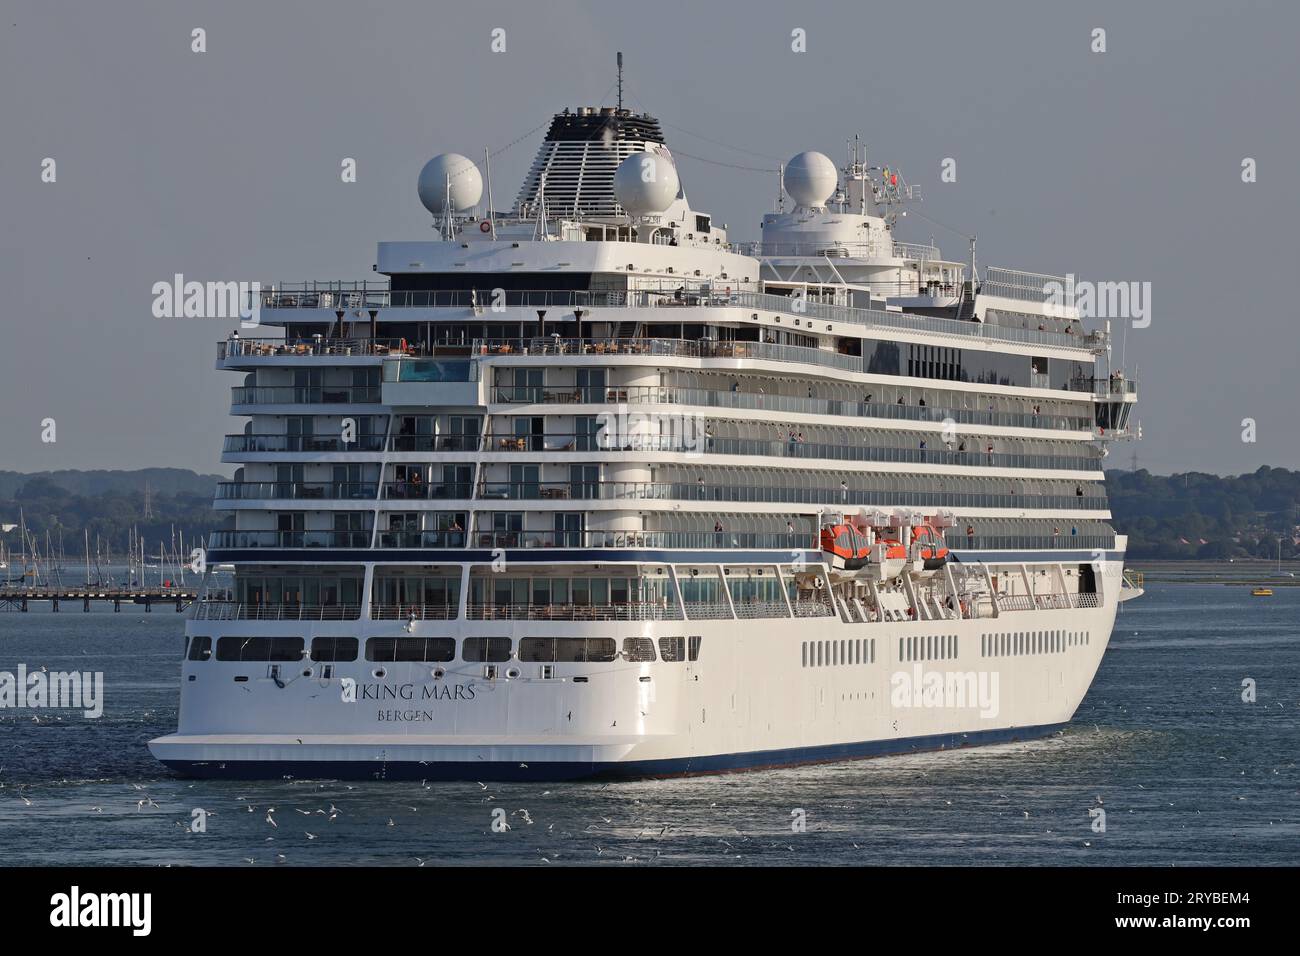 The cruise ship MS VIKING MARS heading towards a berth at the international port terminal Stock Photo